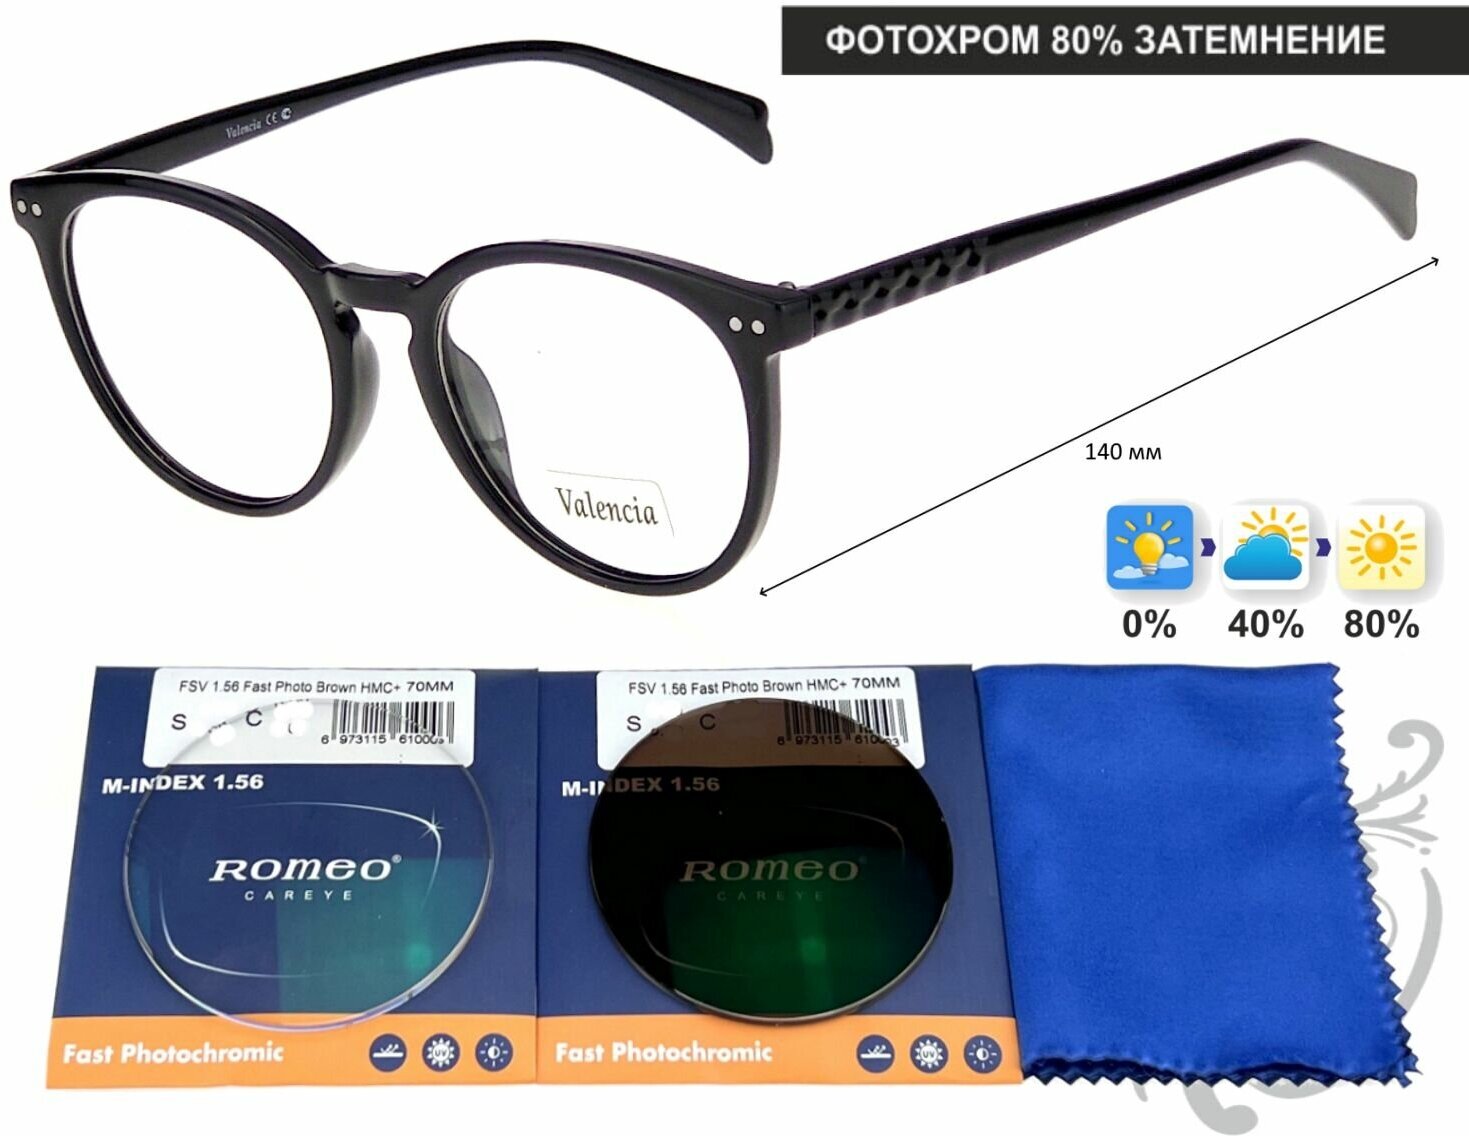 Фотохромные очки VALENCIA мод. 42382 Цвет 1 с линзами ROMEO 1.56 FAST Photocolor BROWN, HMC+ -3.50 РЦ 60-62